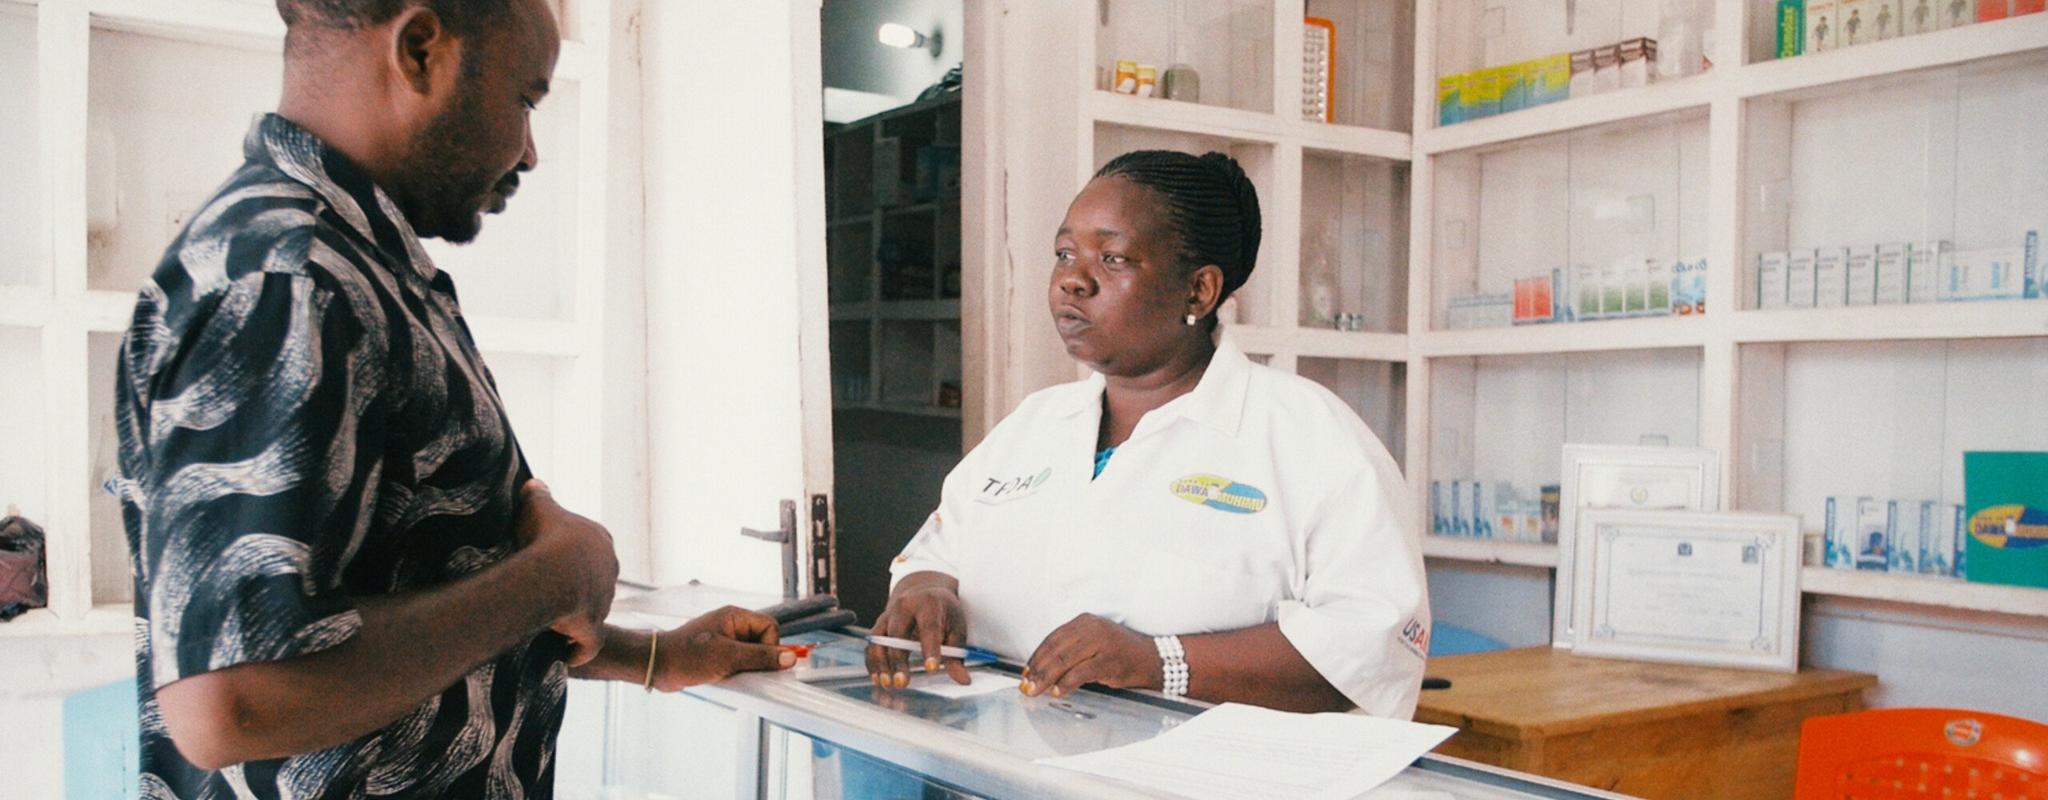 Pharmacist talks to a customer in a pharmacy.